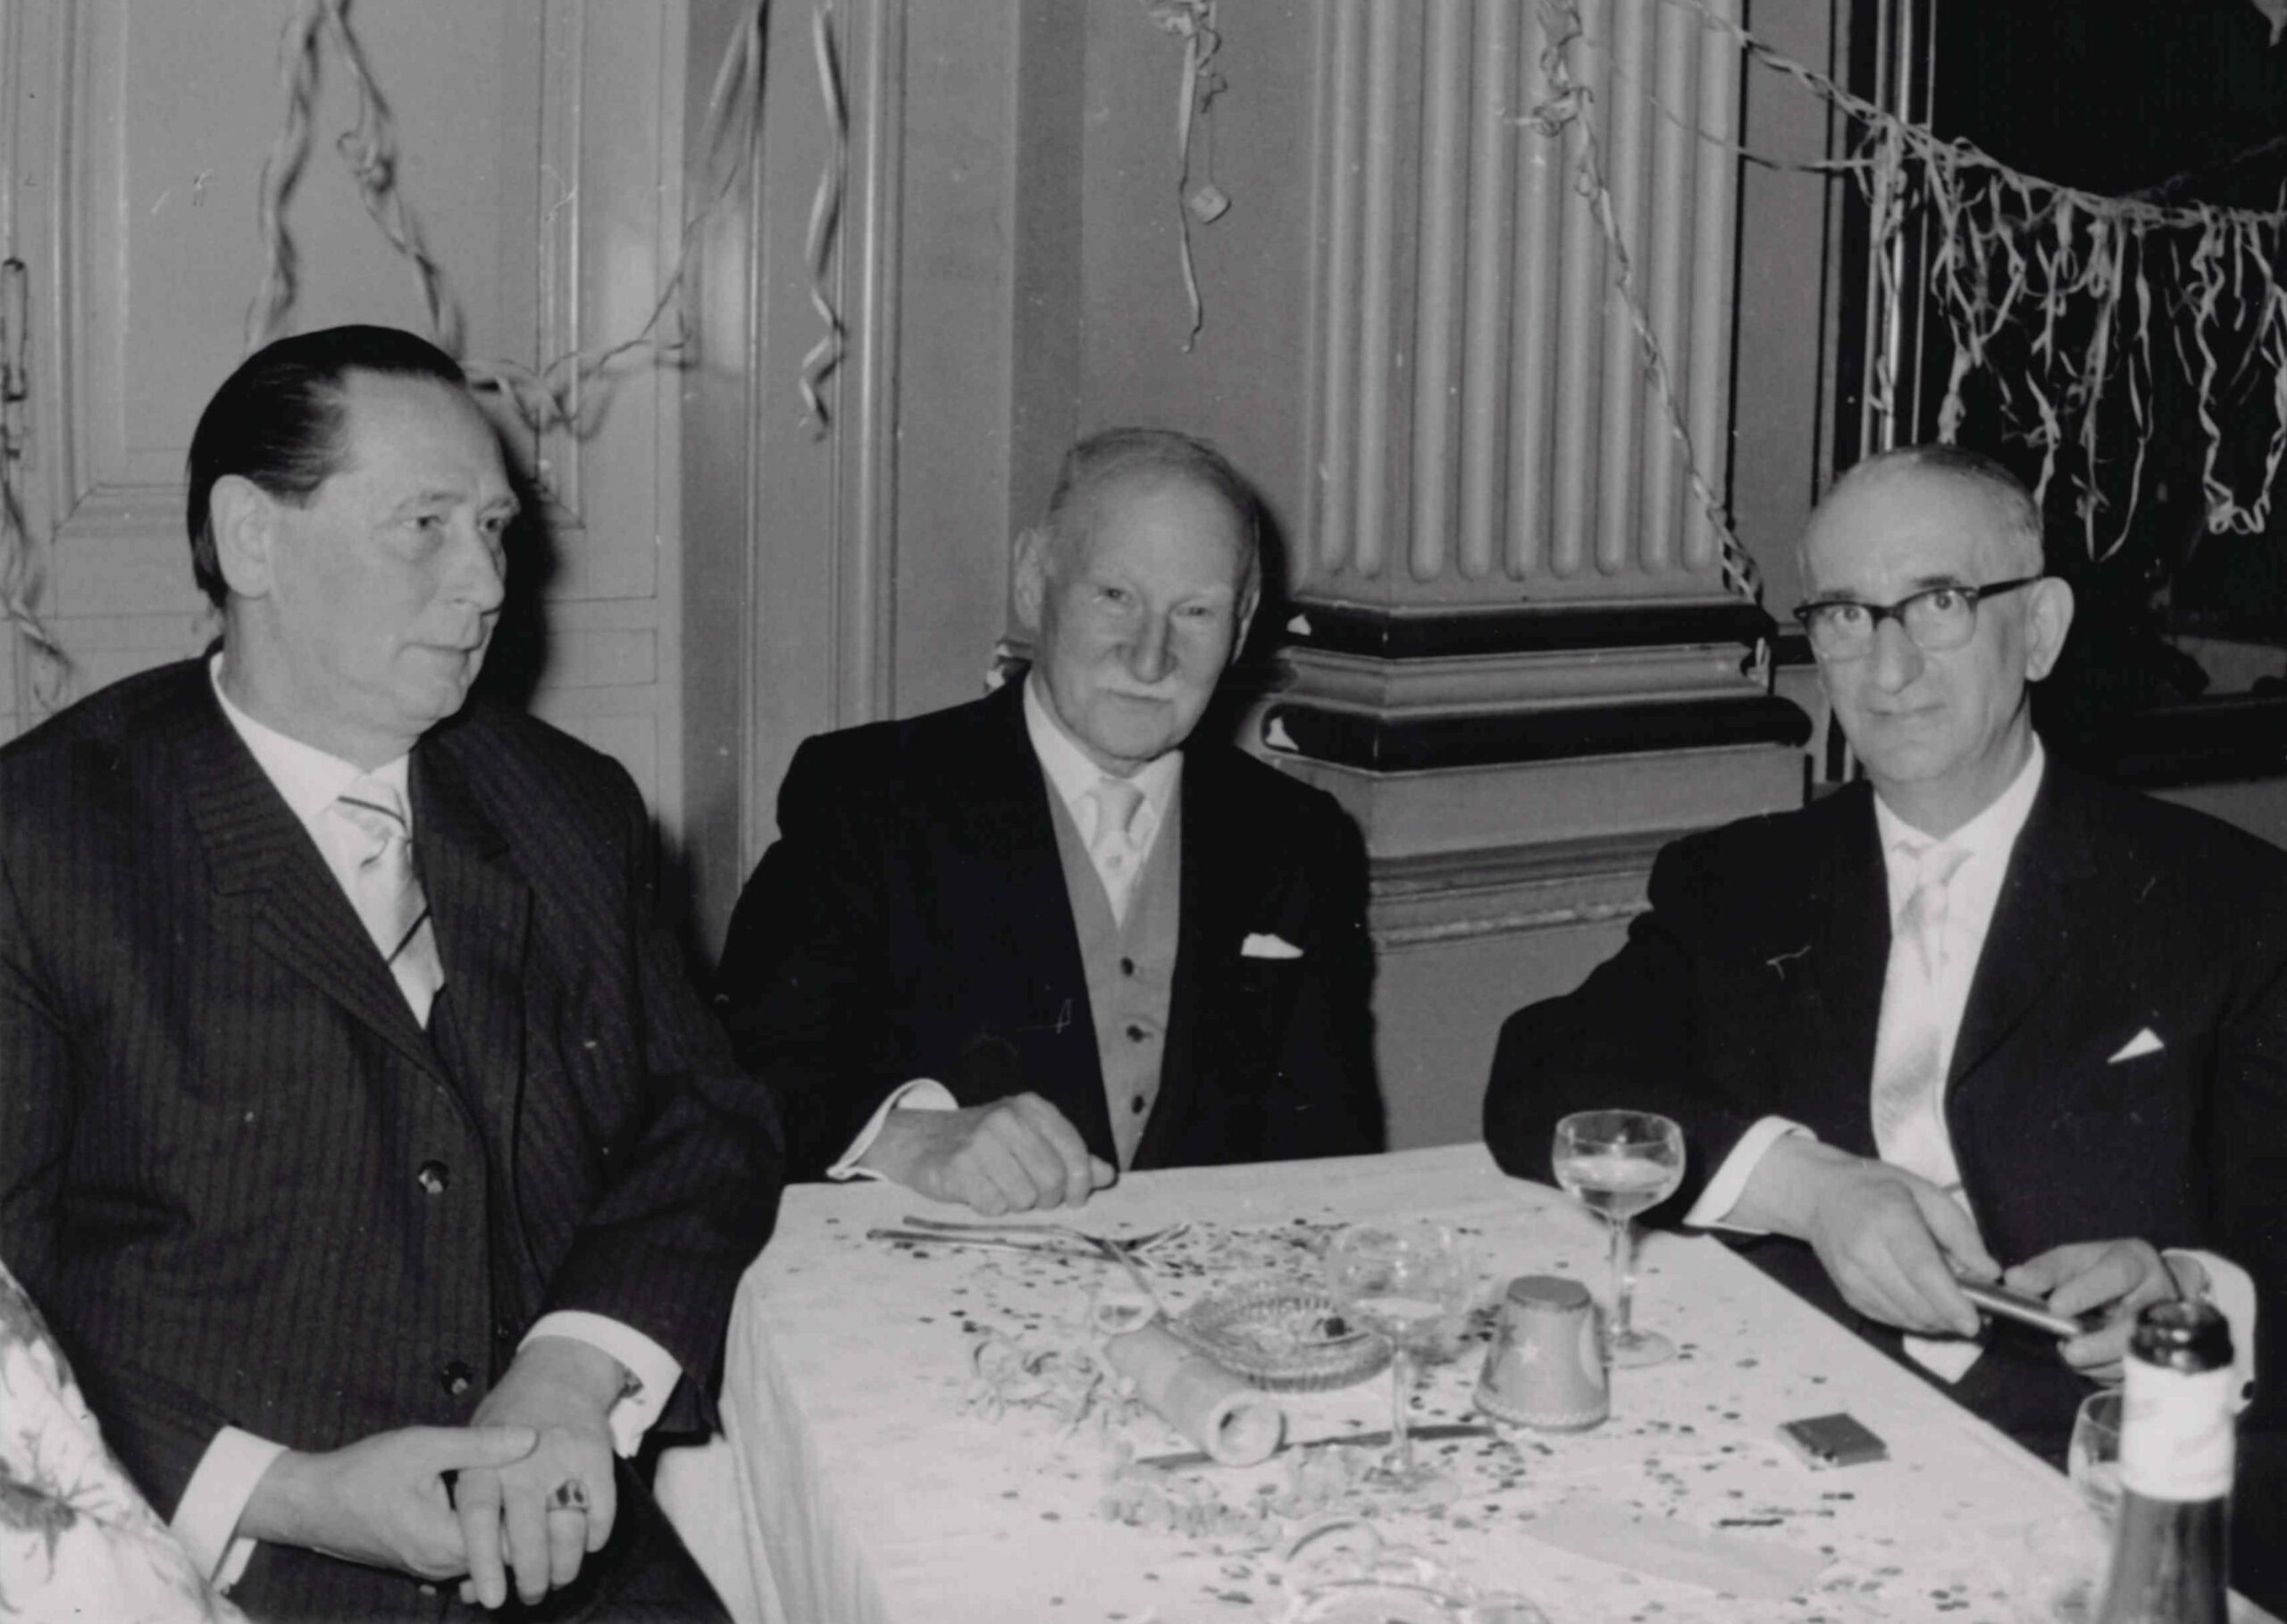 Dr. Friedrich Reichmann (center), chairman of the Wiesbaden Jewish Community, with Wilhelm Freund (left), chairman of the Society for Christian-Jewish Cooperation, at a community event, ca. 1963. Collection Wiesbaden Jewish Community